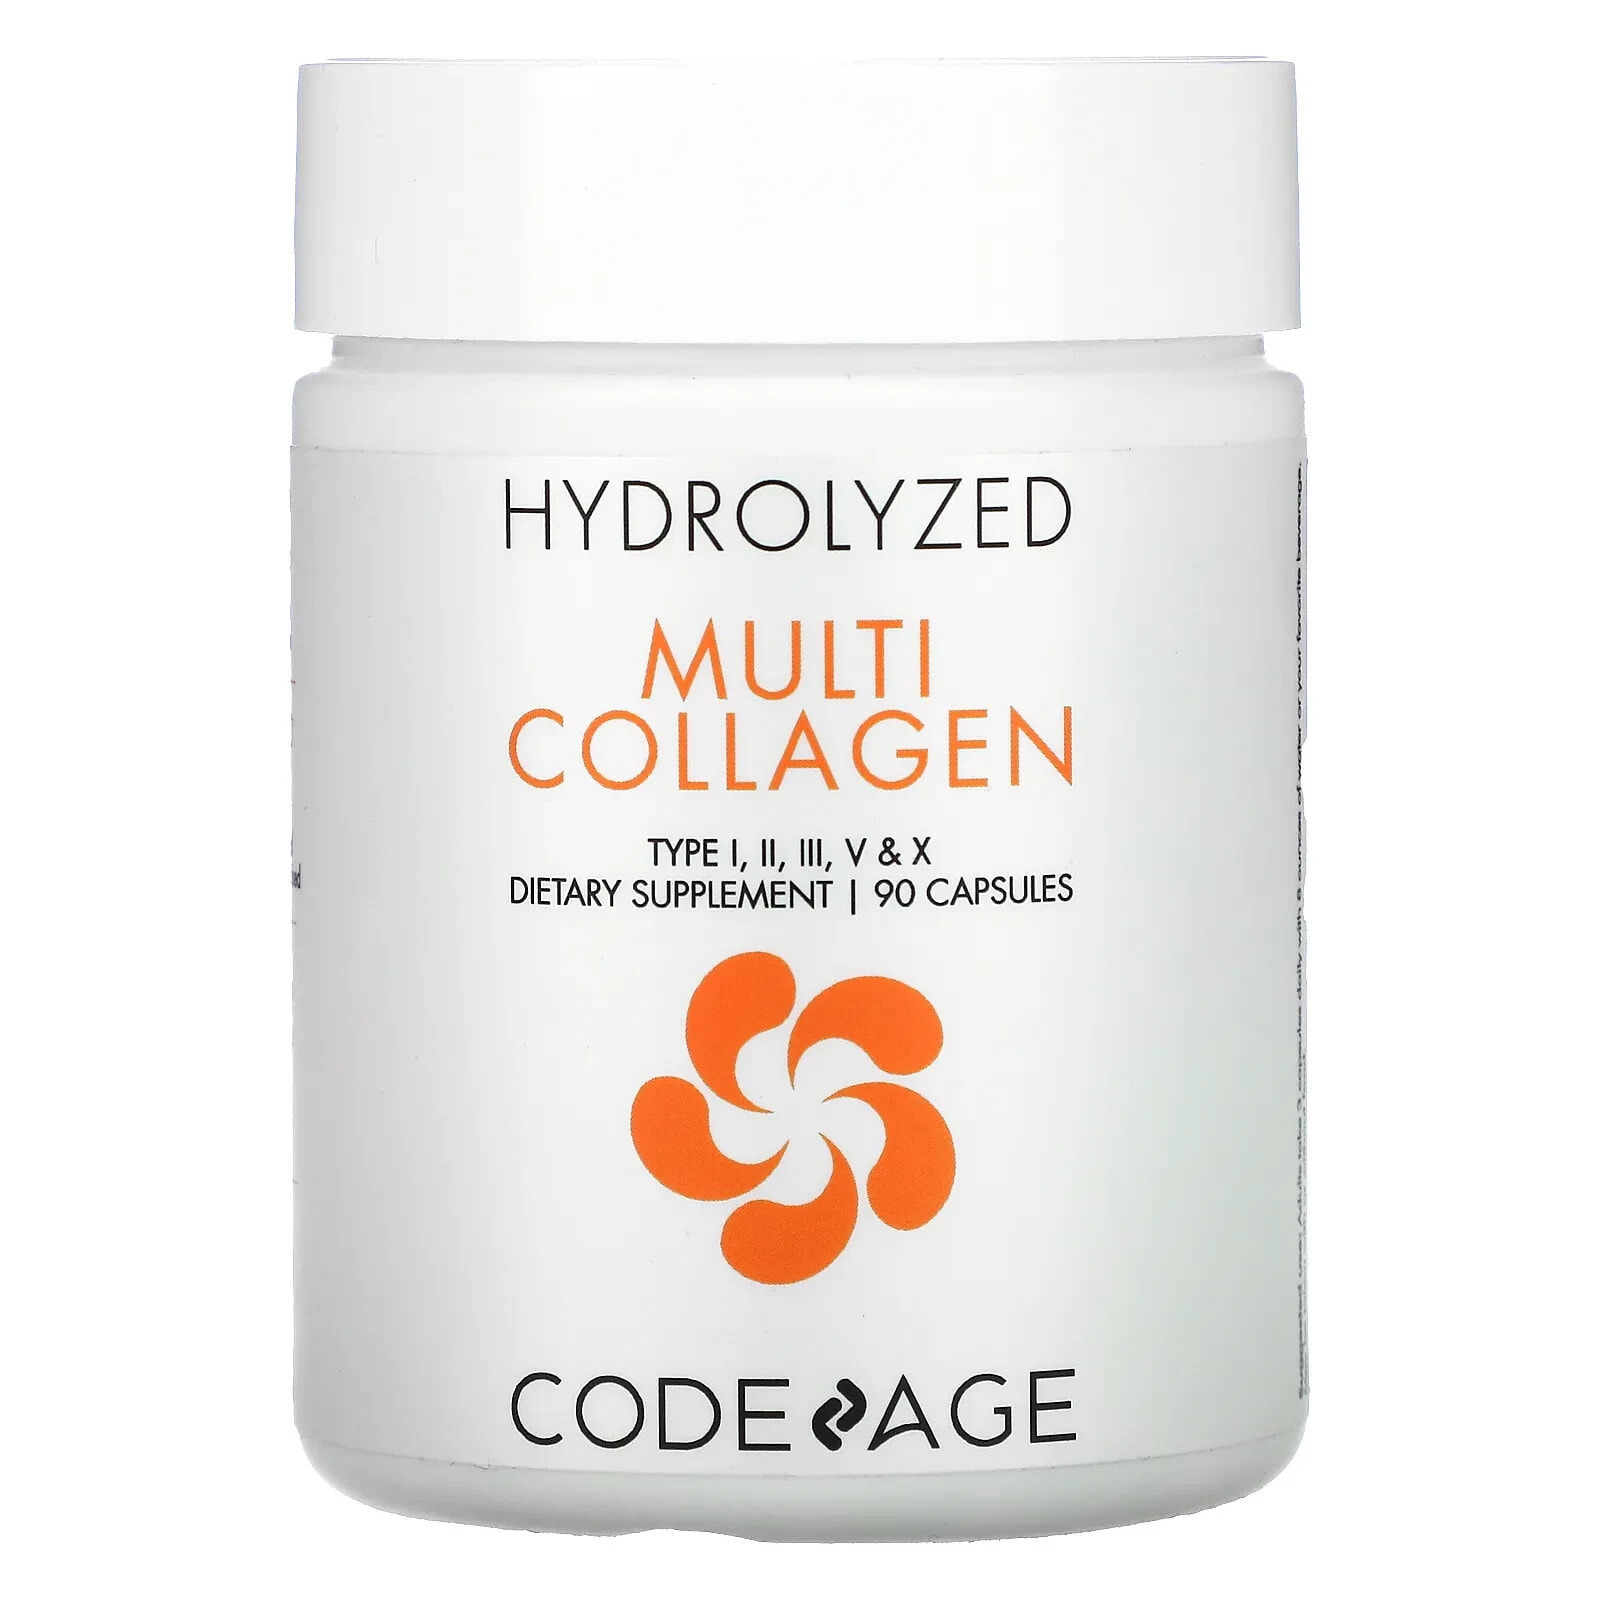 Hydrolyzed, Multi Collagen, Type I, II, III, V, X, 90 Capsules